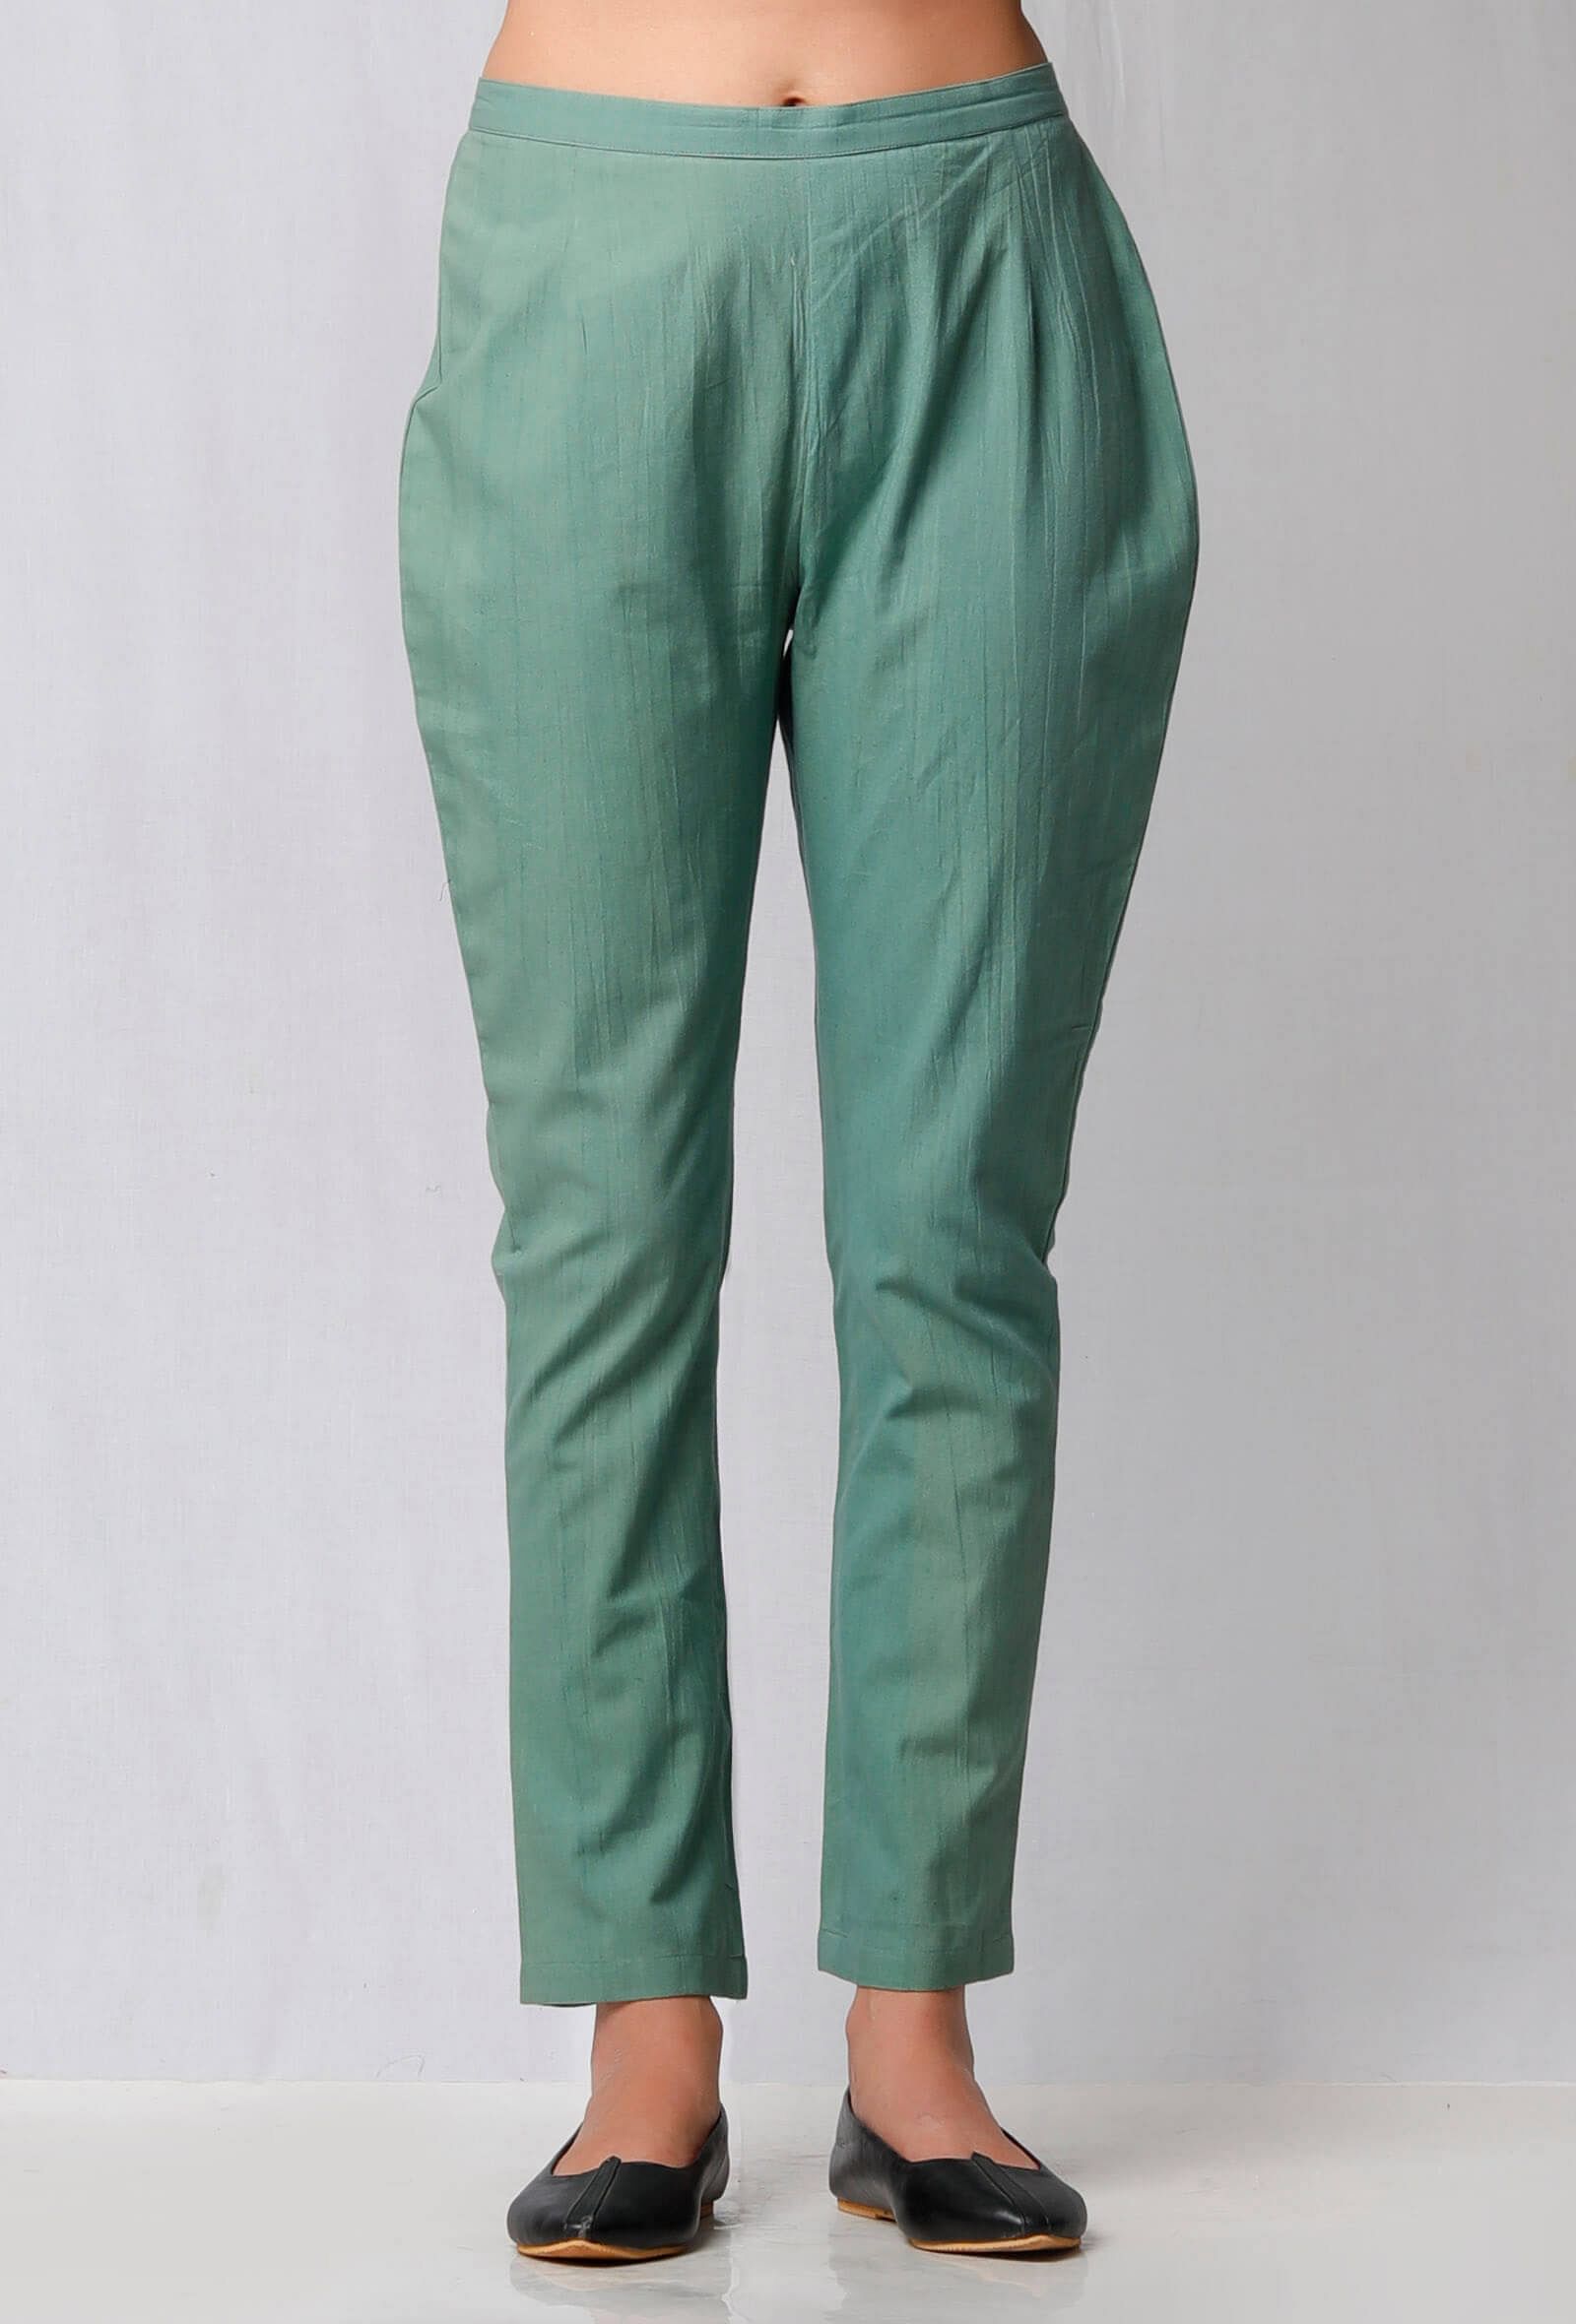 Light Sea Green Plain Pants